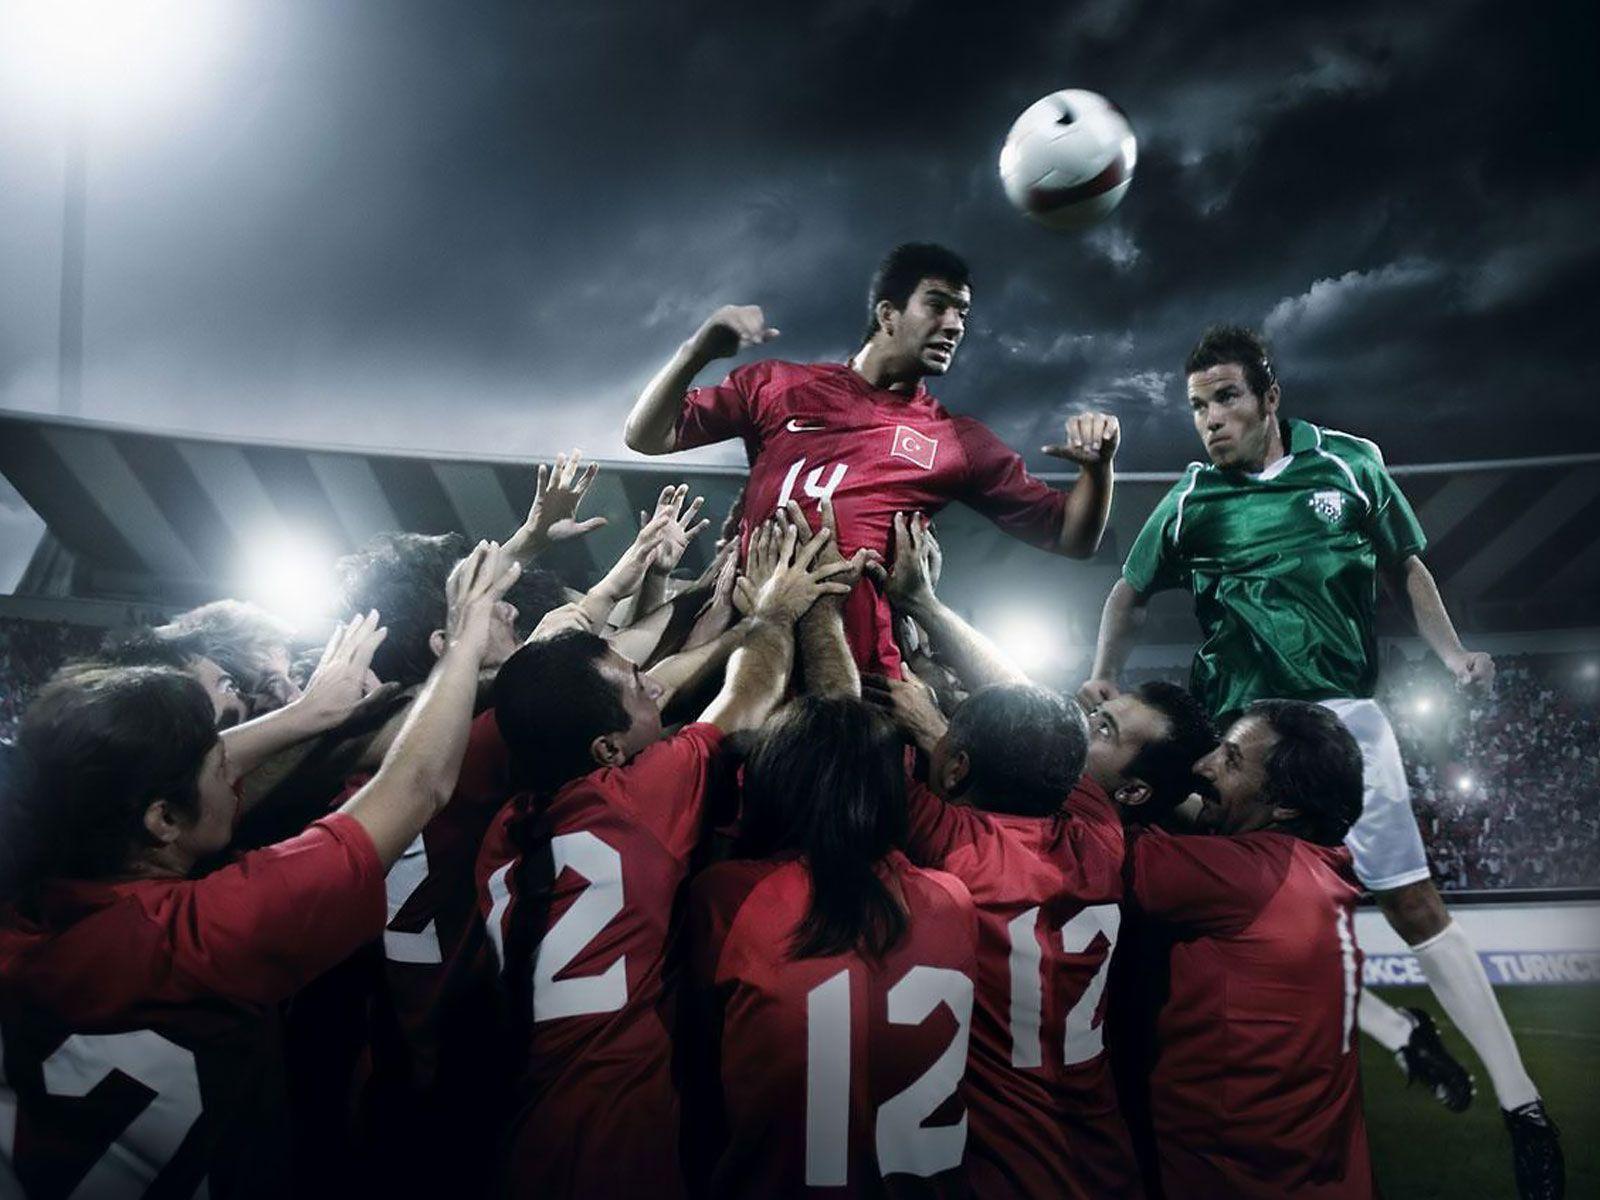 Desktop Wallpaper · Gallery · Sports · FIFA World Cup. Free